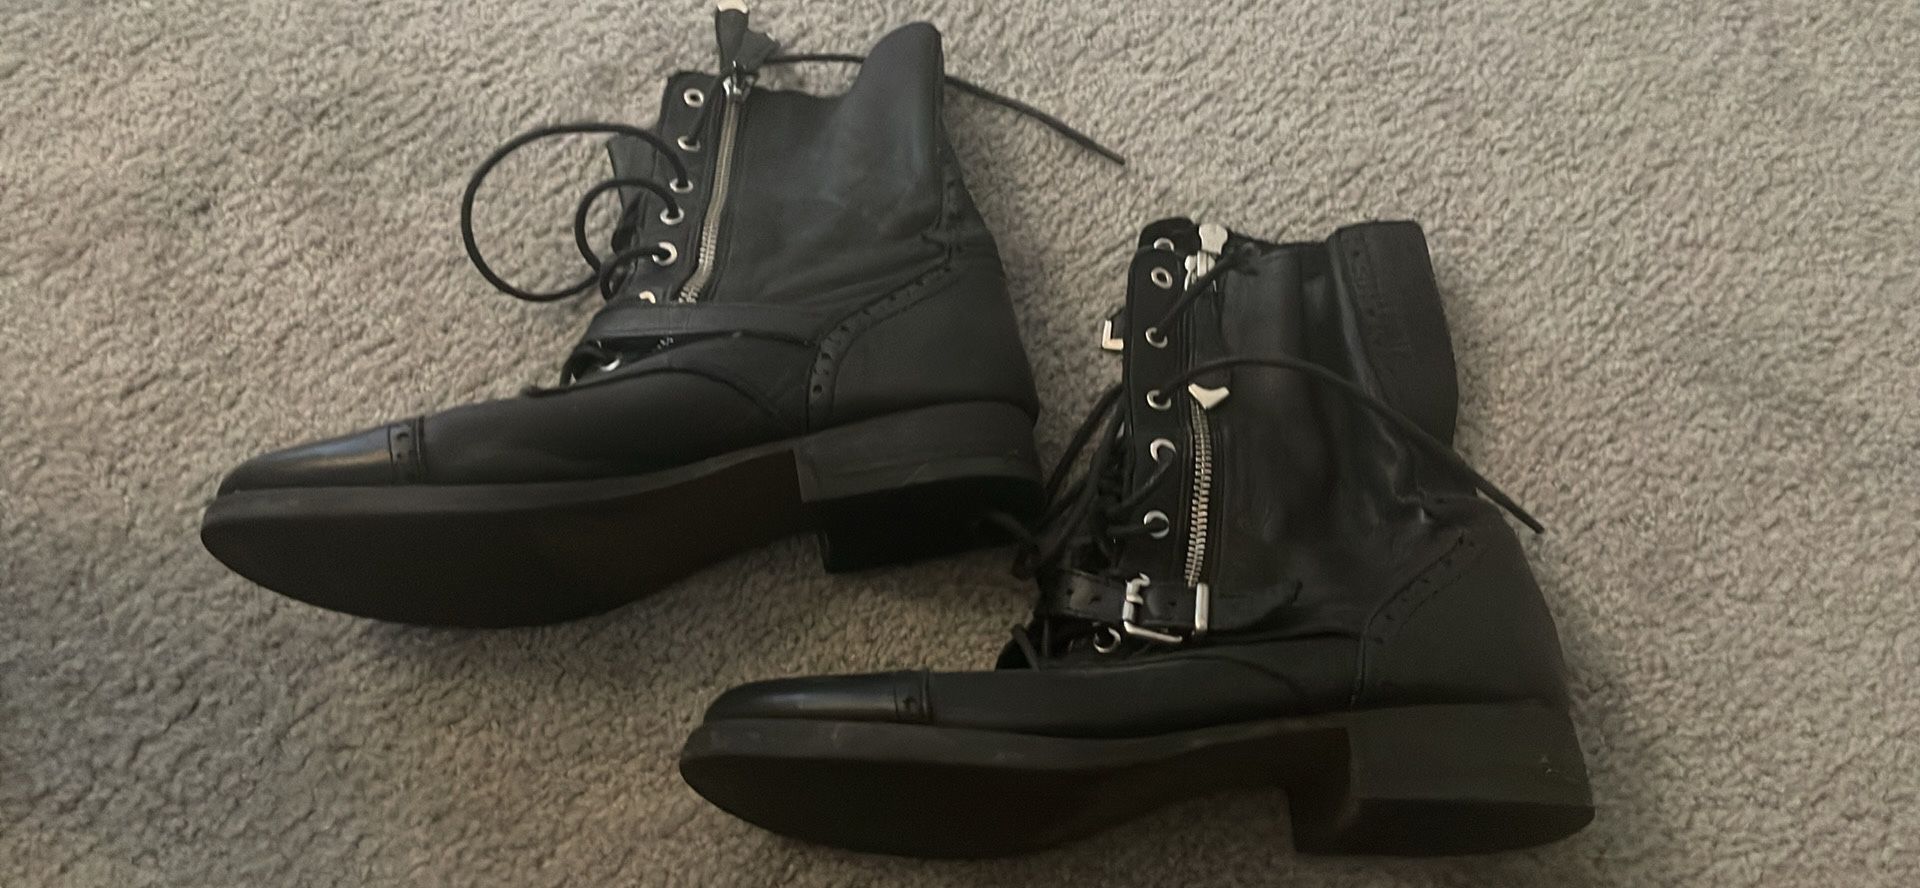 Black Boots Size 8.5